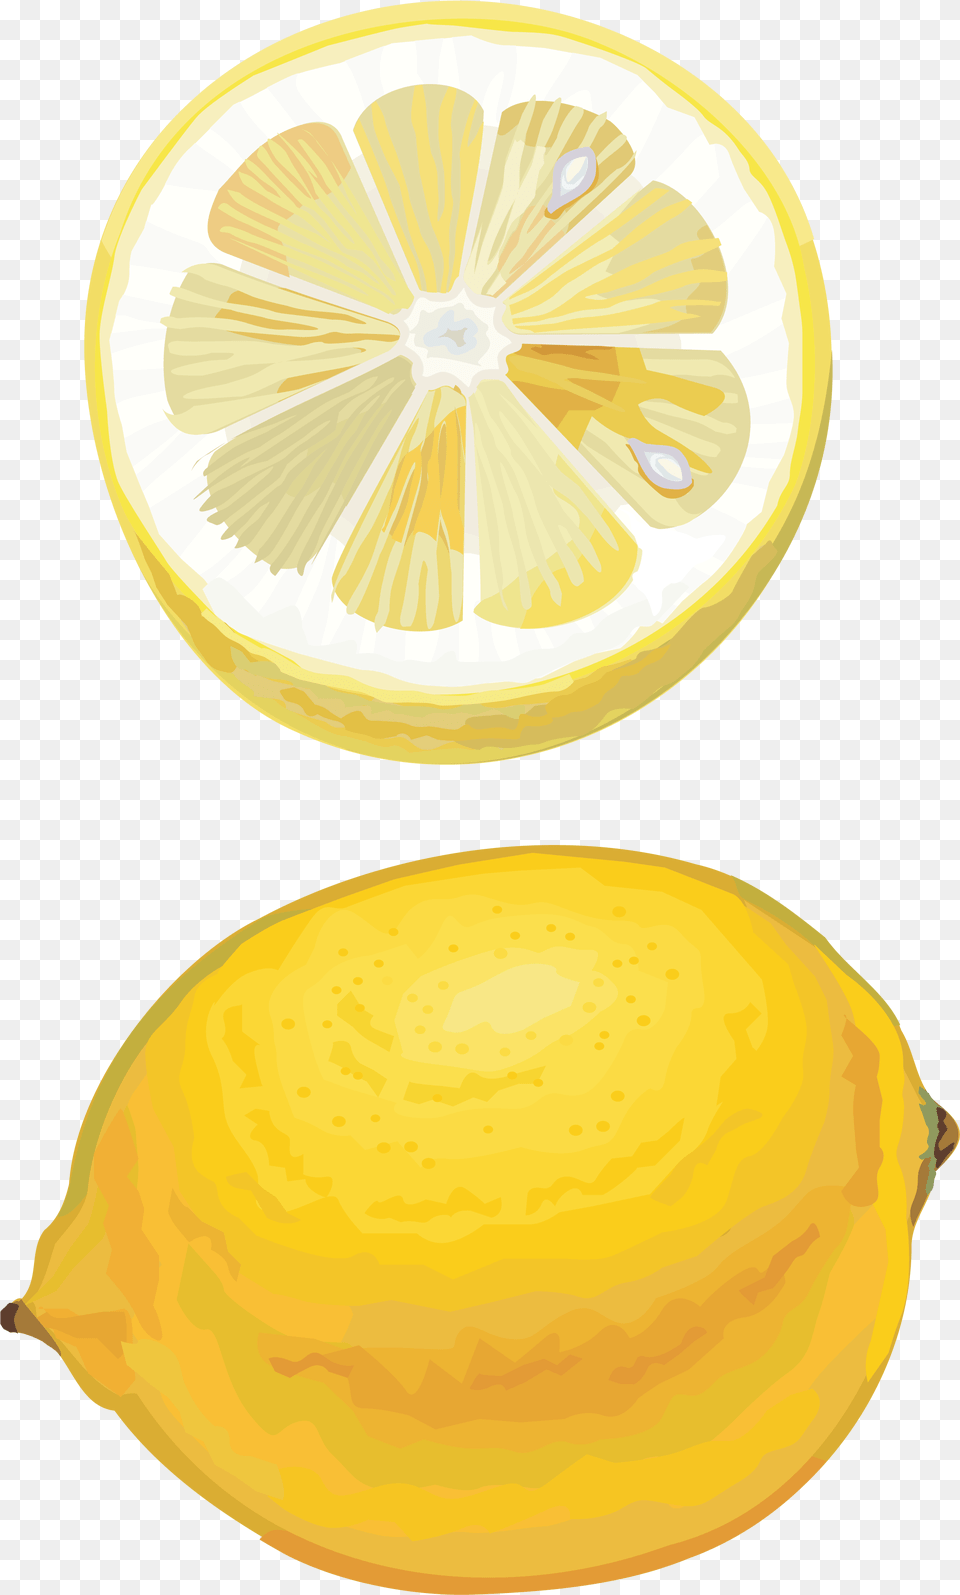 Lemon Drawing Transparent, Produce, Citrus Fruit, Food, Fruit Png Image